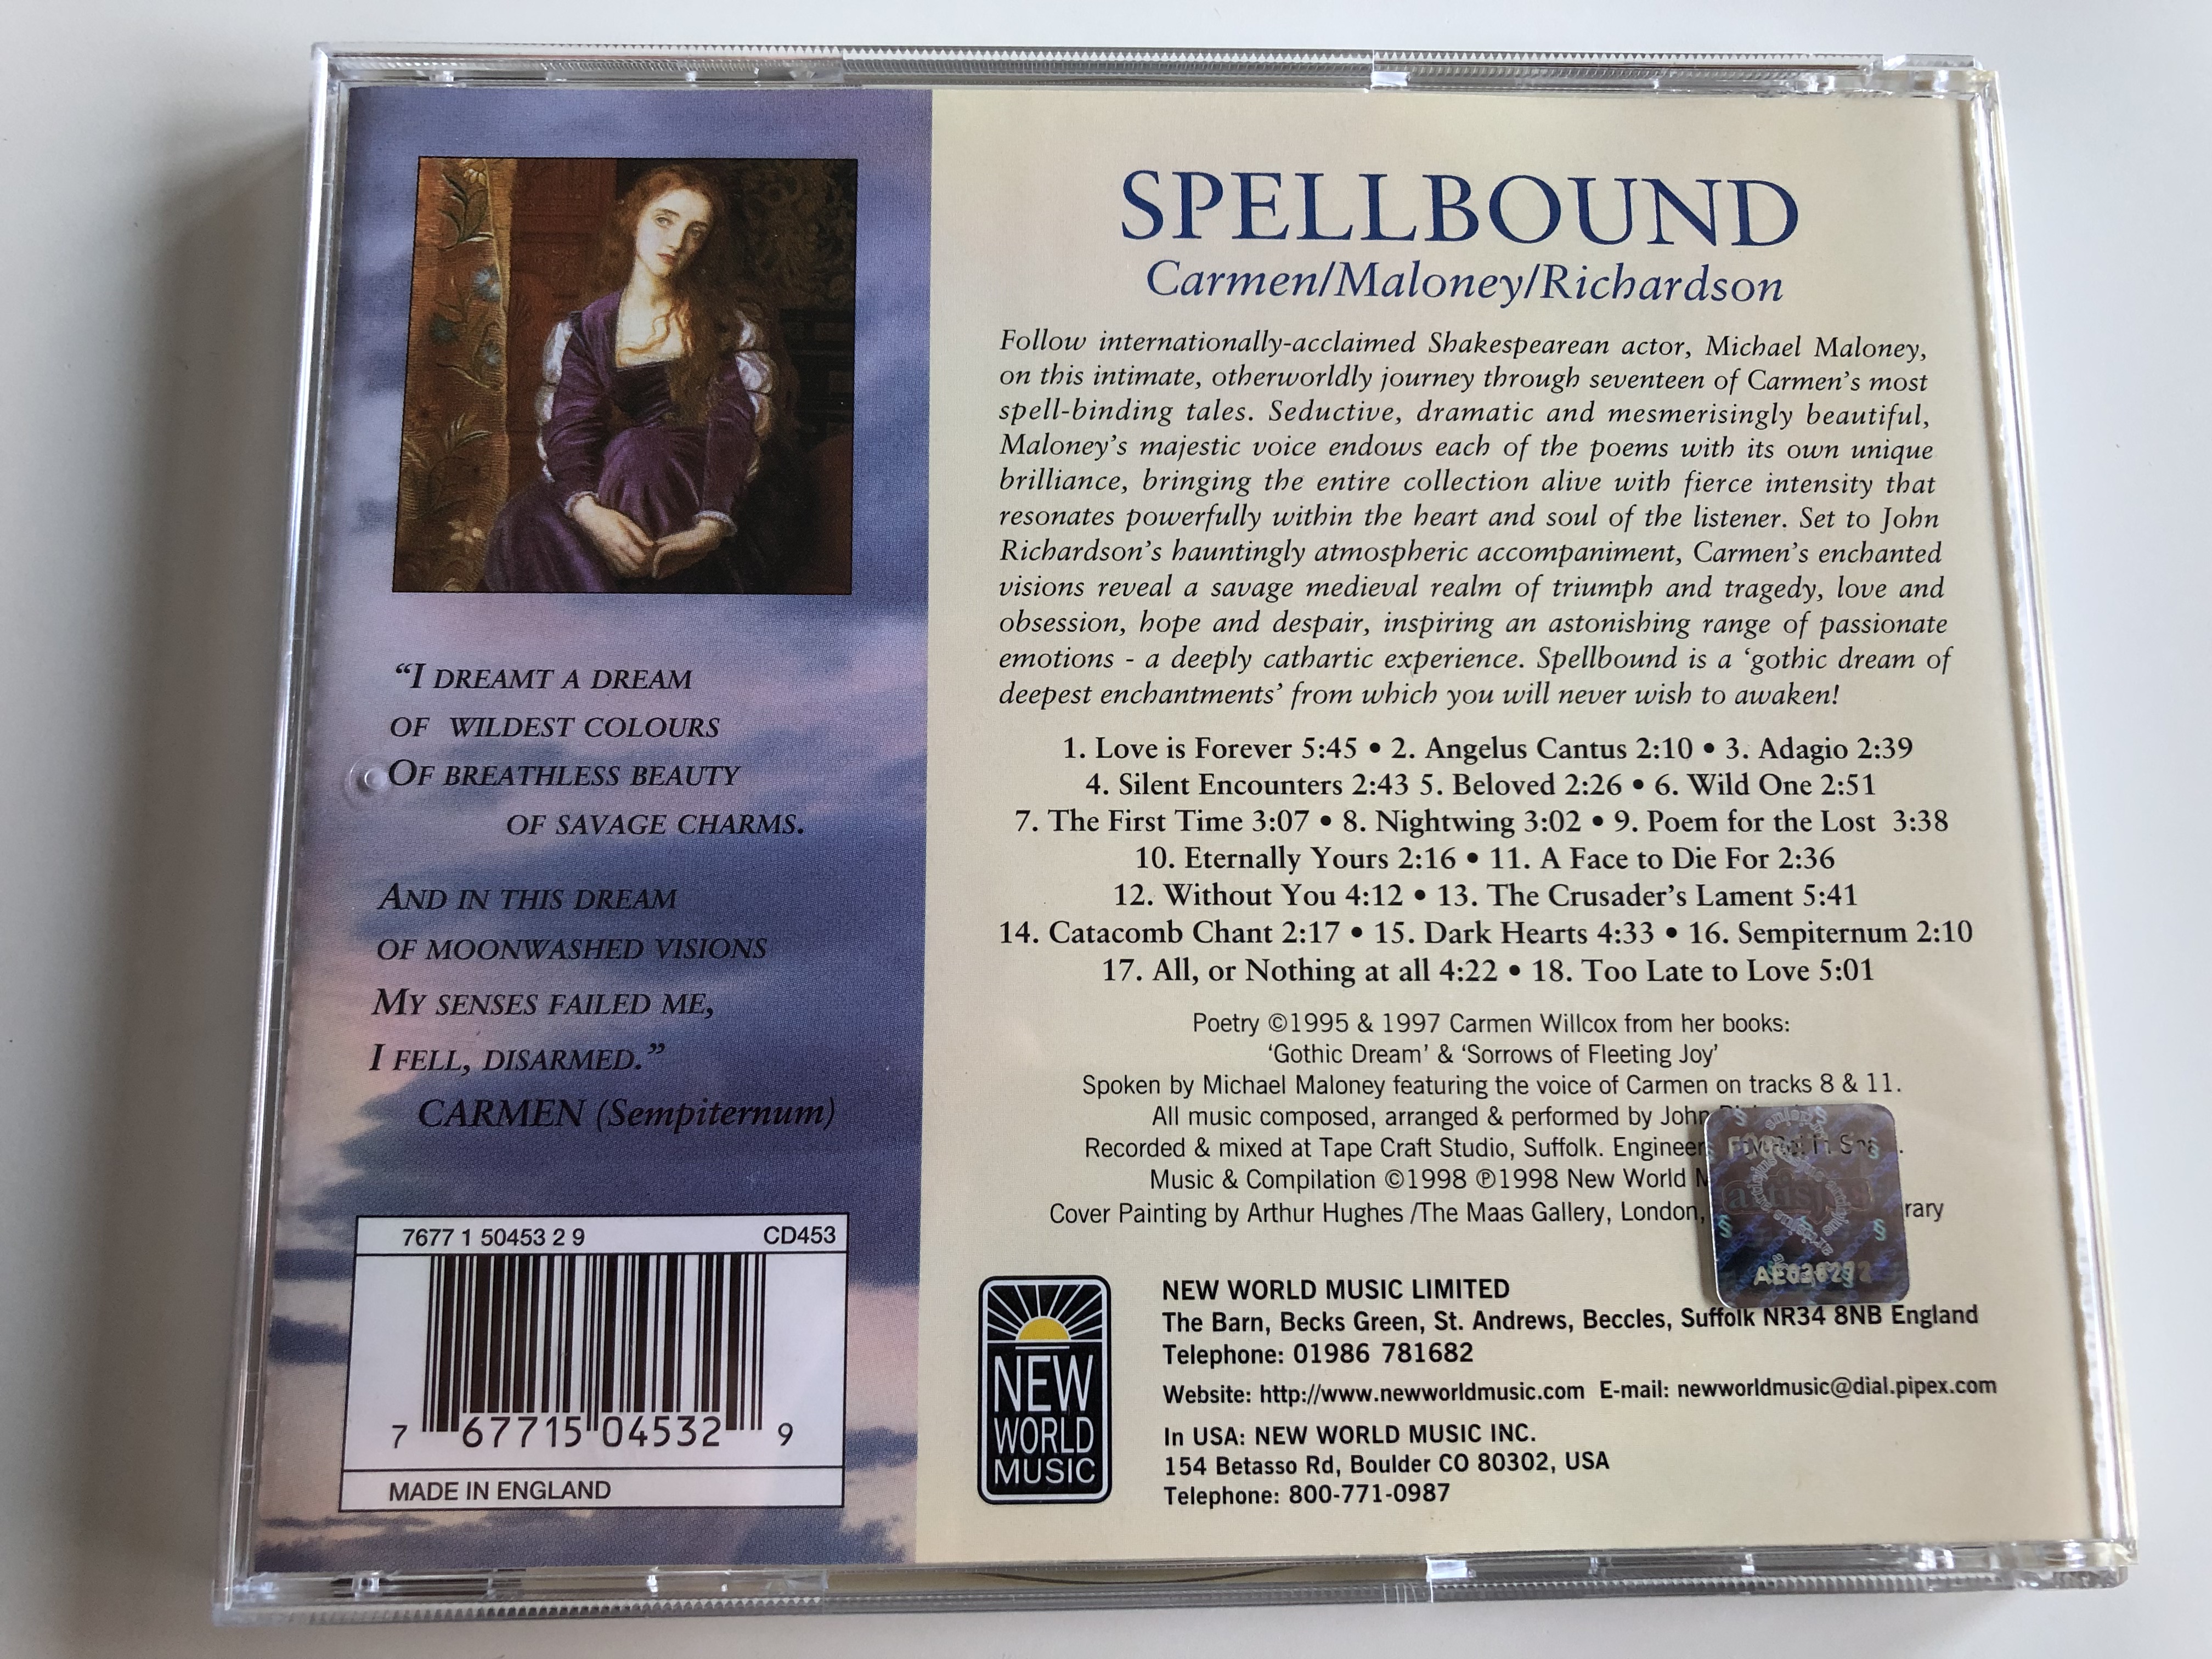 spellbound-the-romantic-poetry-of-carmen-spoken-by-michael-maloney-music-by-john-richardson-new-world-music-audio-cd-1998-nwcd-453-4-.jpg